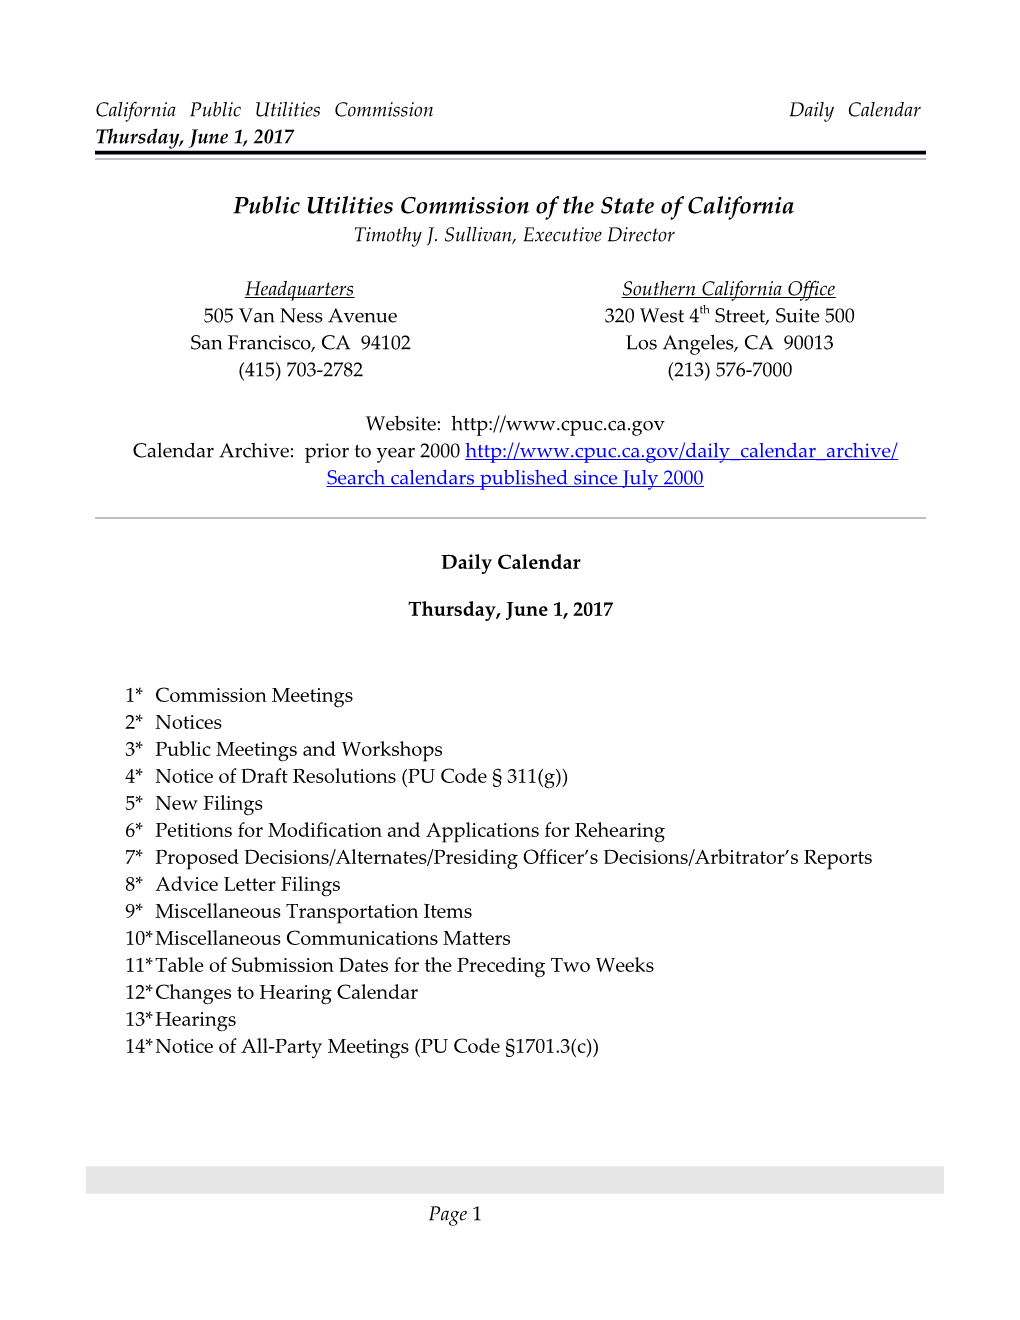 California Public Utilities Commission Daily Calendar Thursday, June 1, 2017